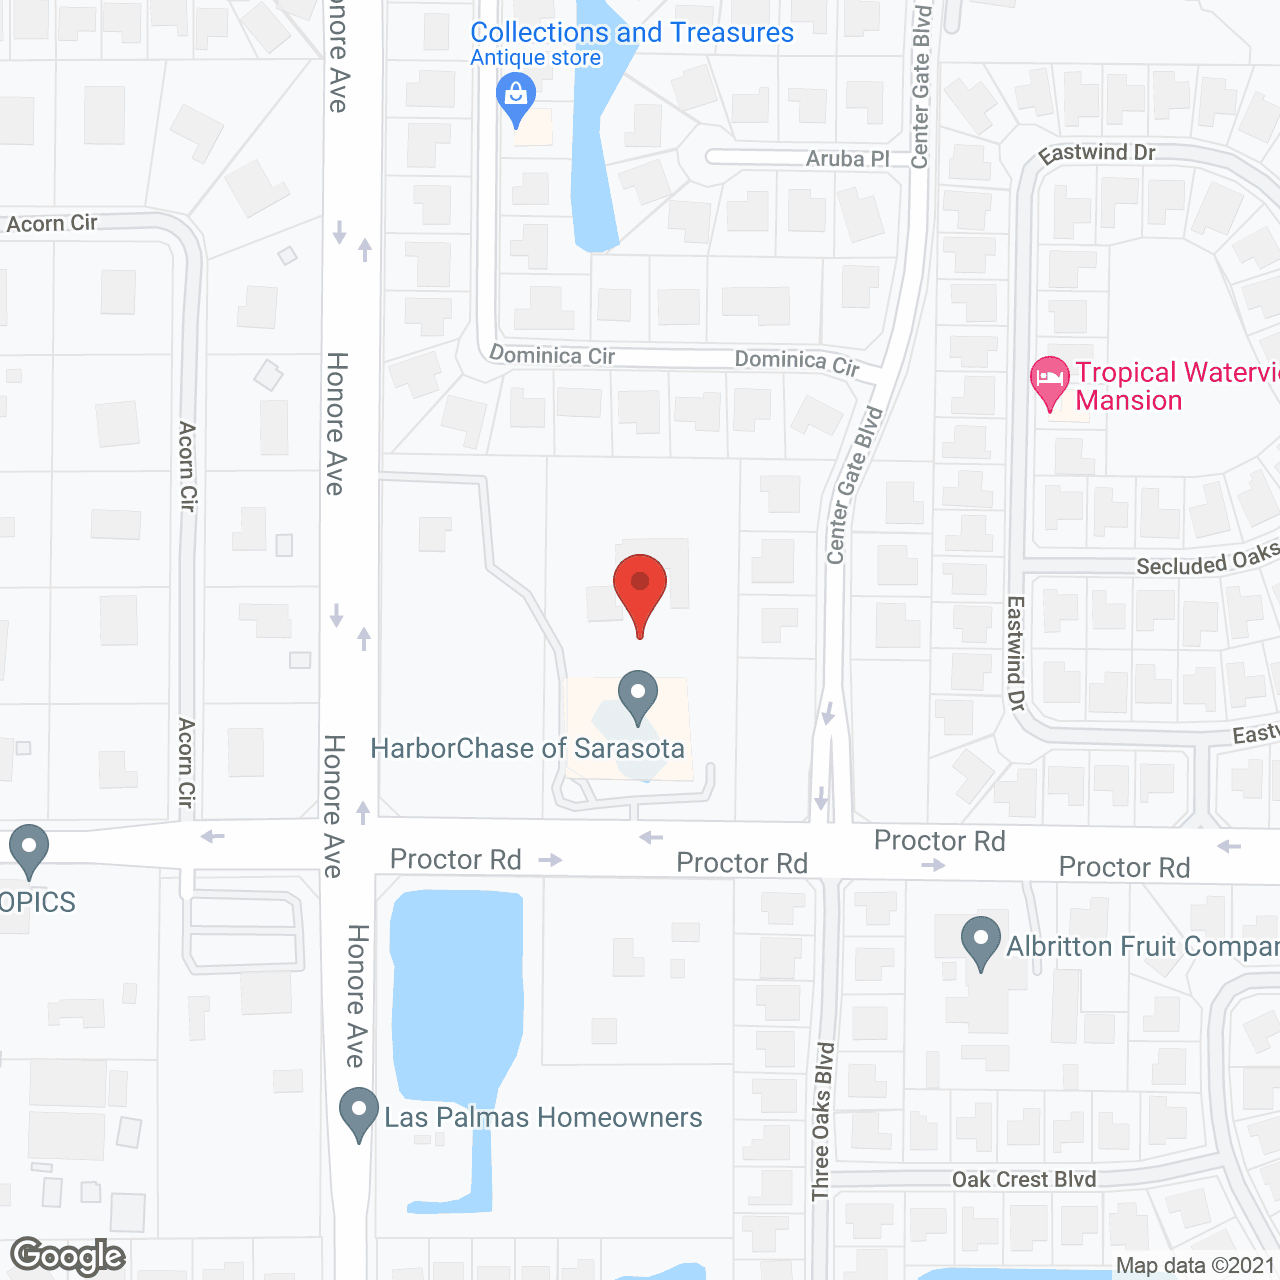 HarborChase of Sarasota in google map